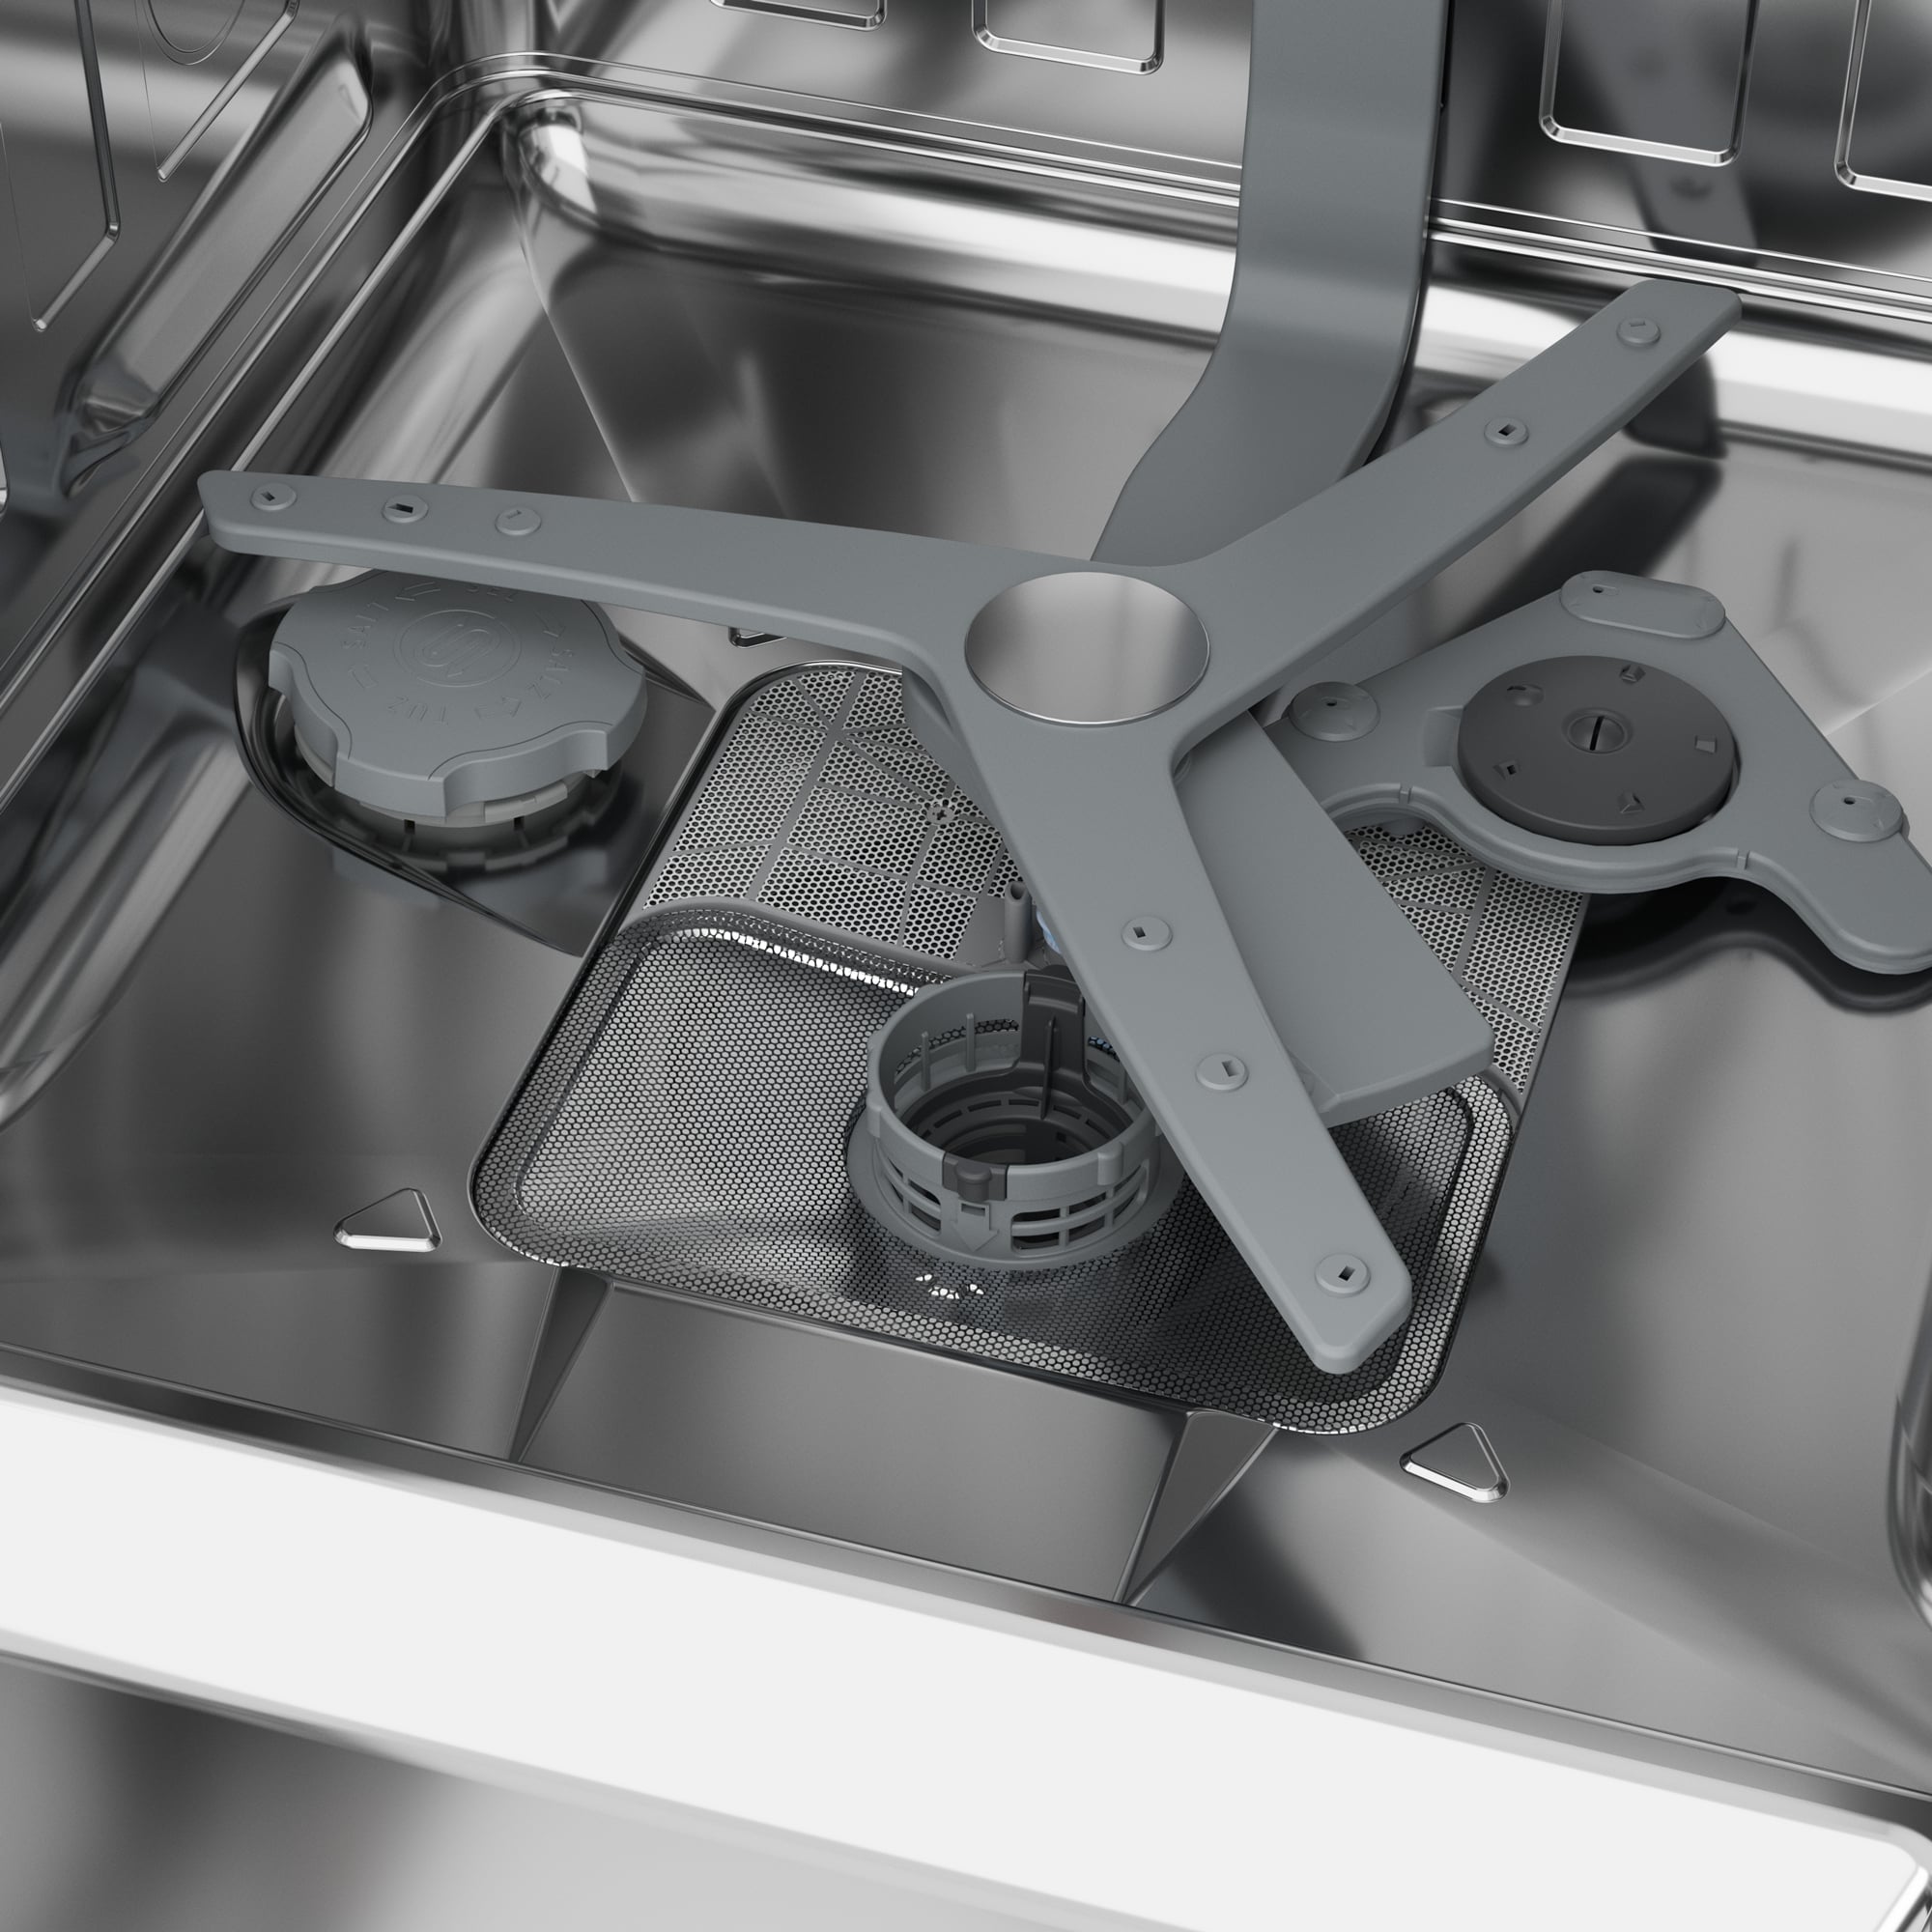 Beko Dishwasher 15 Sets 11 Programs - Silver